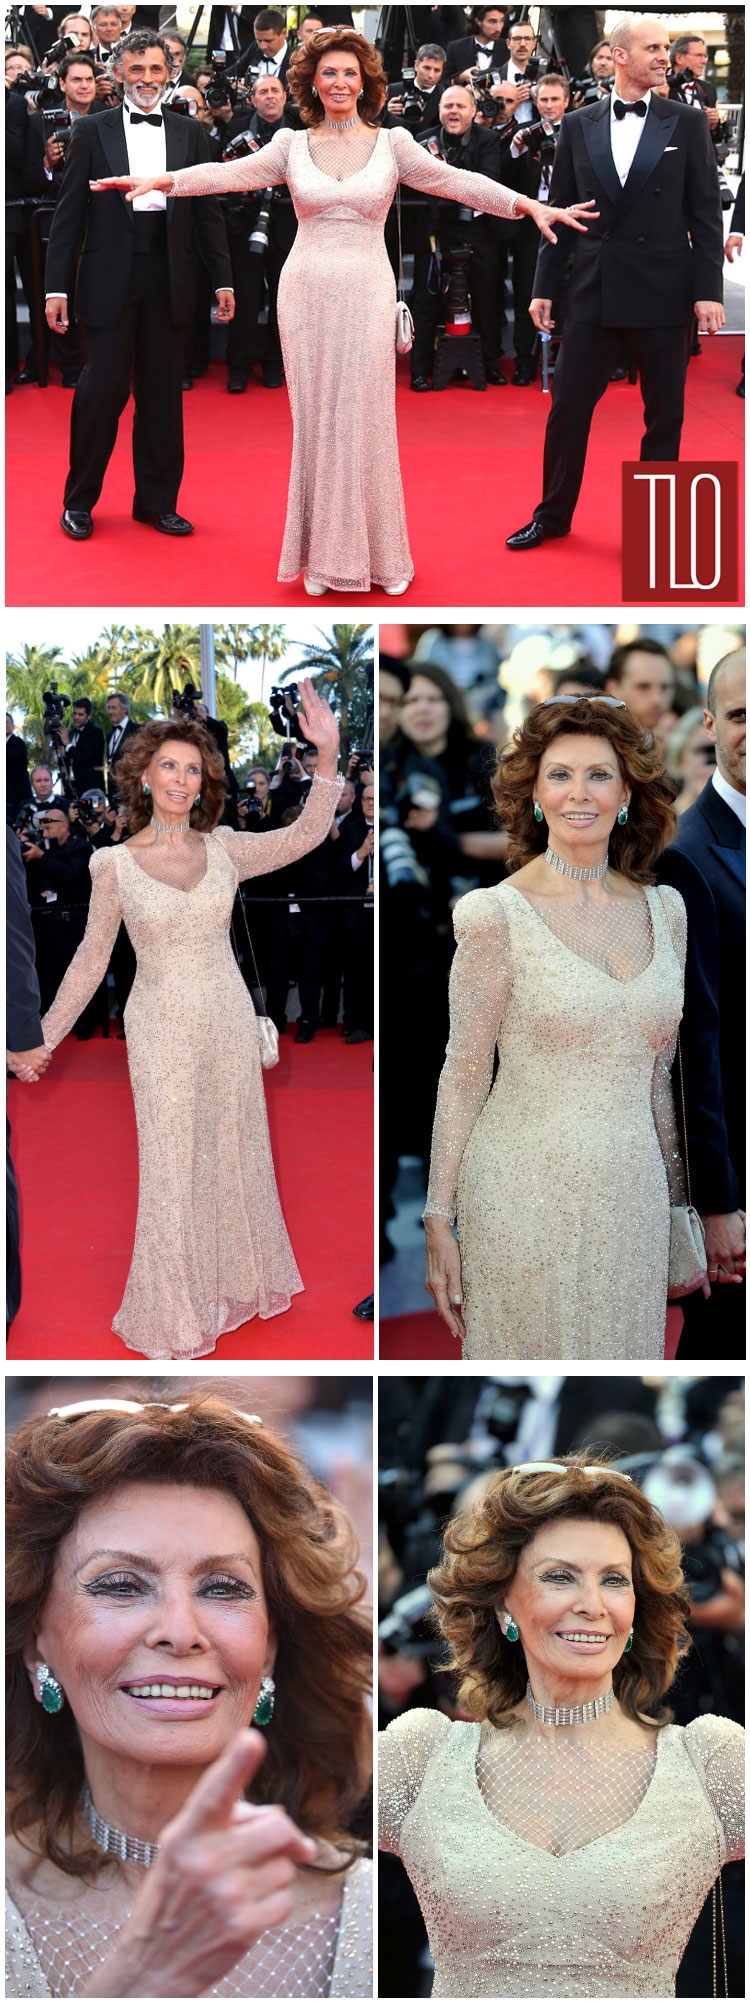 Sophia-Loren-Voce-Umana-Giorgio-Armani-Cannes-2014-Tom-Lorenzo-Site-TLO (2)